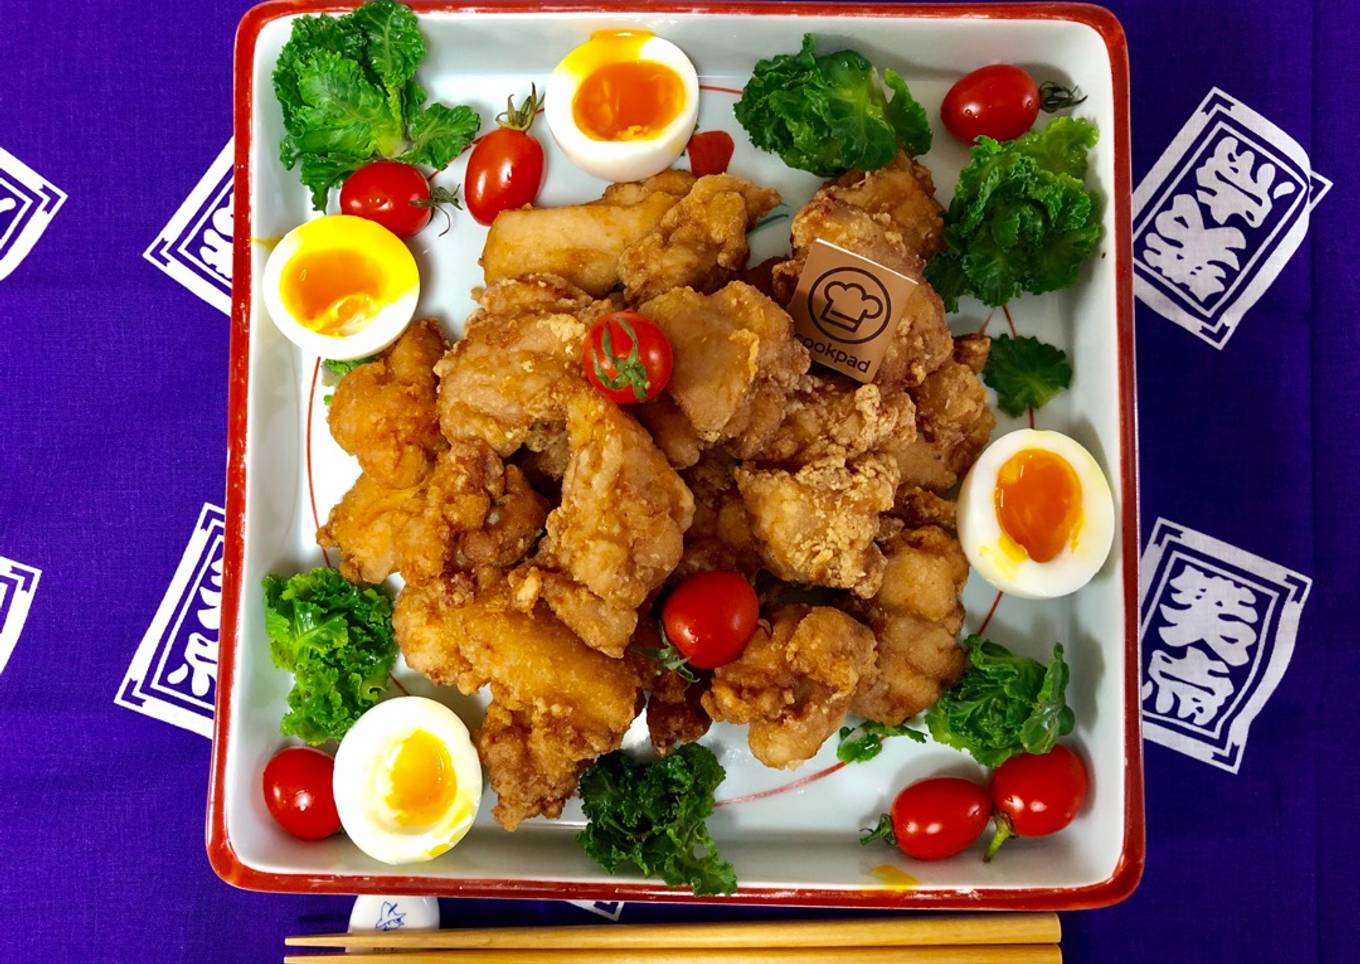 Japanese Fried Chicken